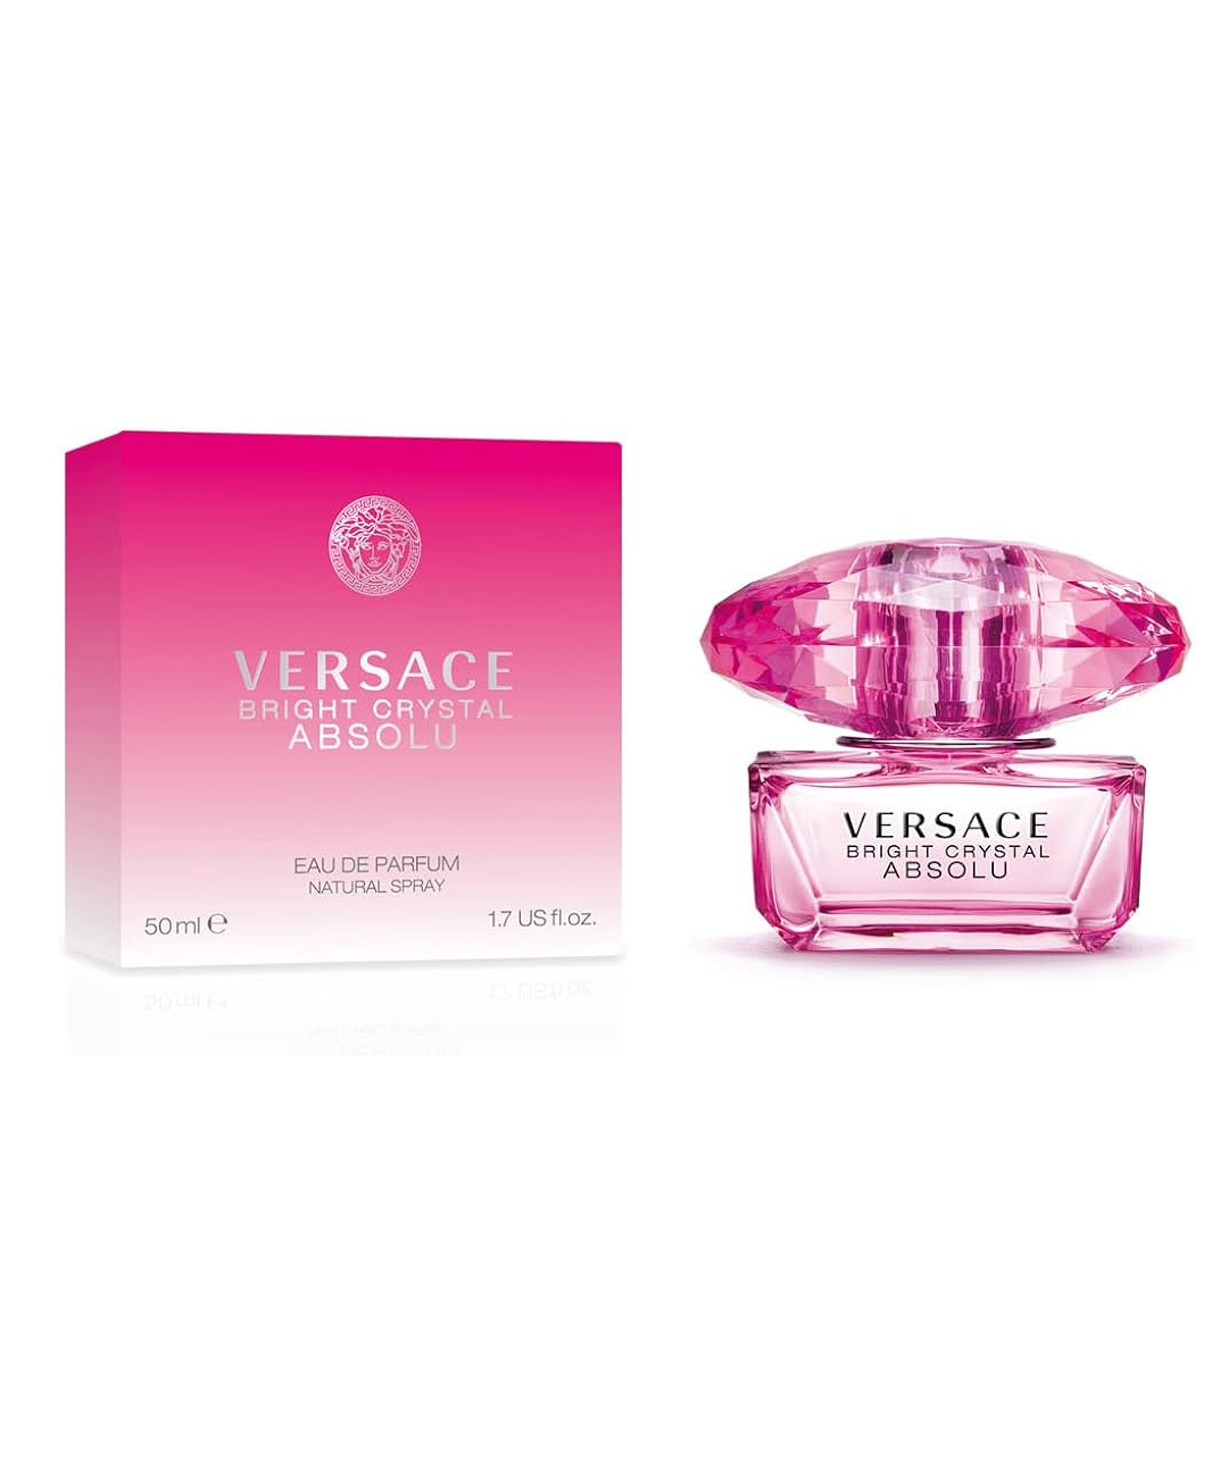 Perfume «Versace» Bright Crystal Absolu, for women, 50 ml